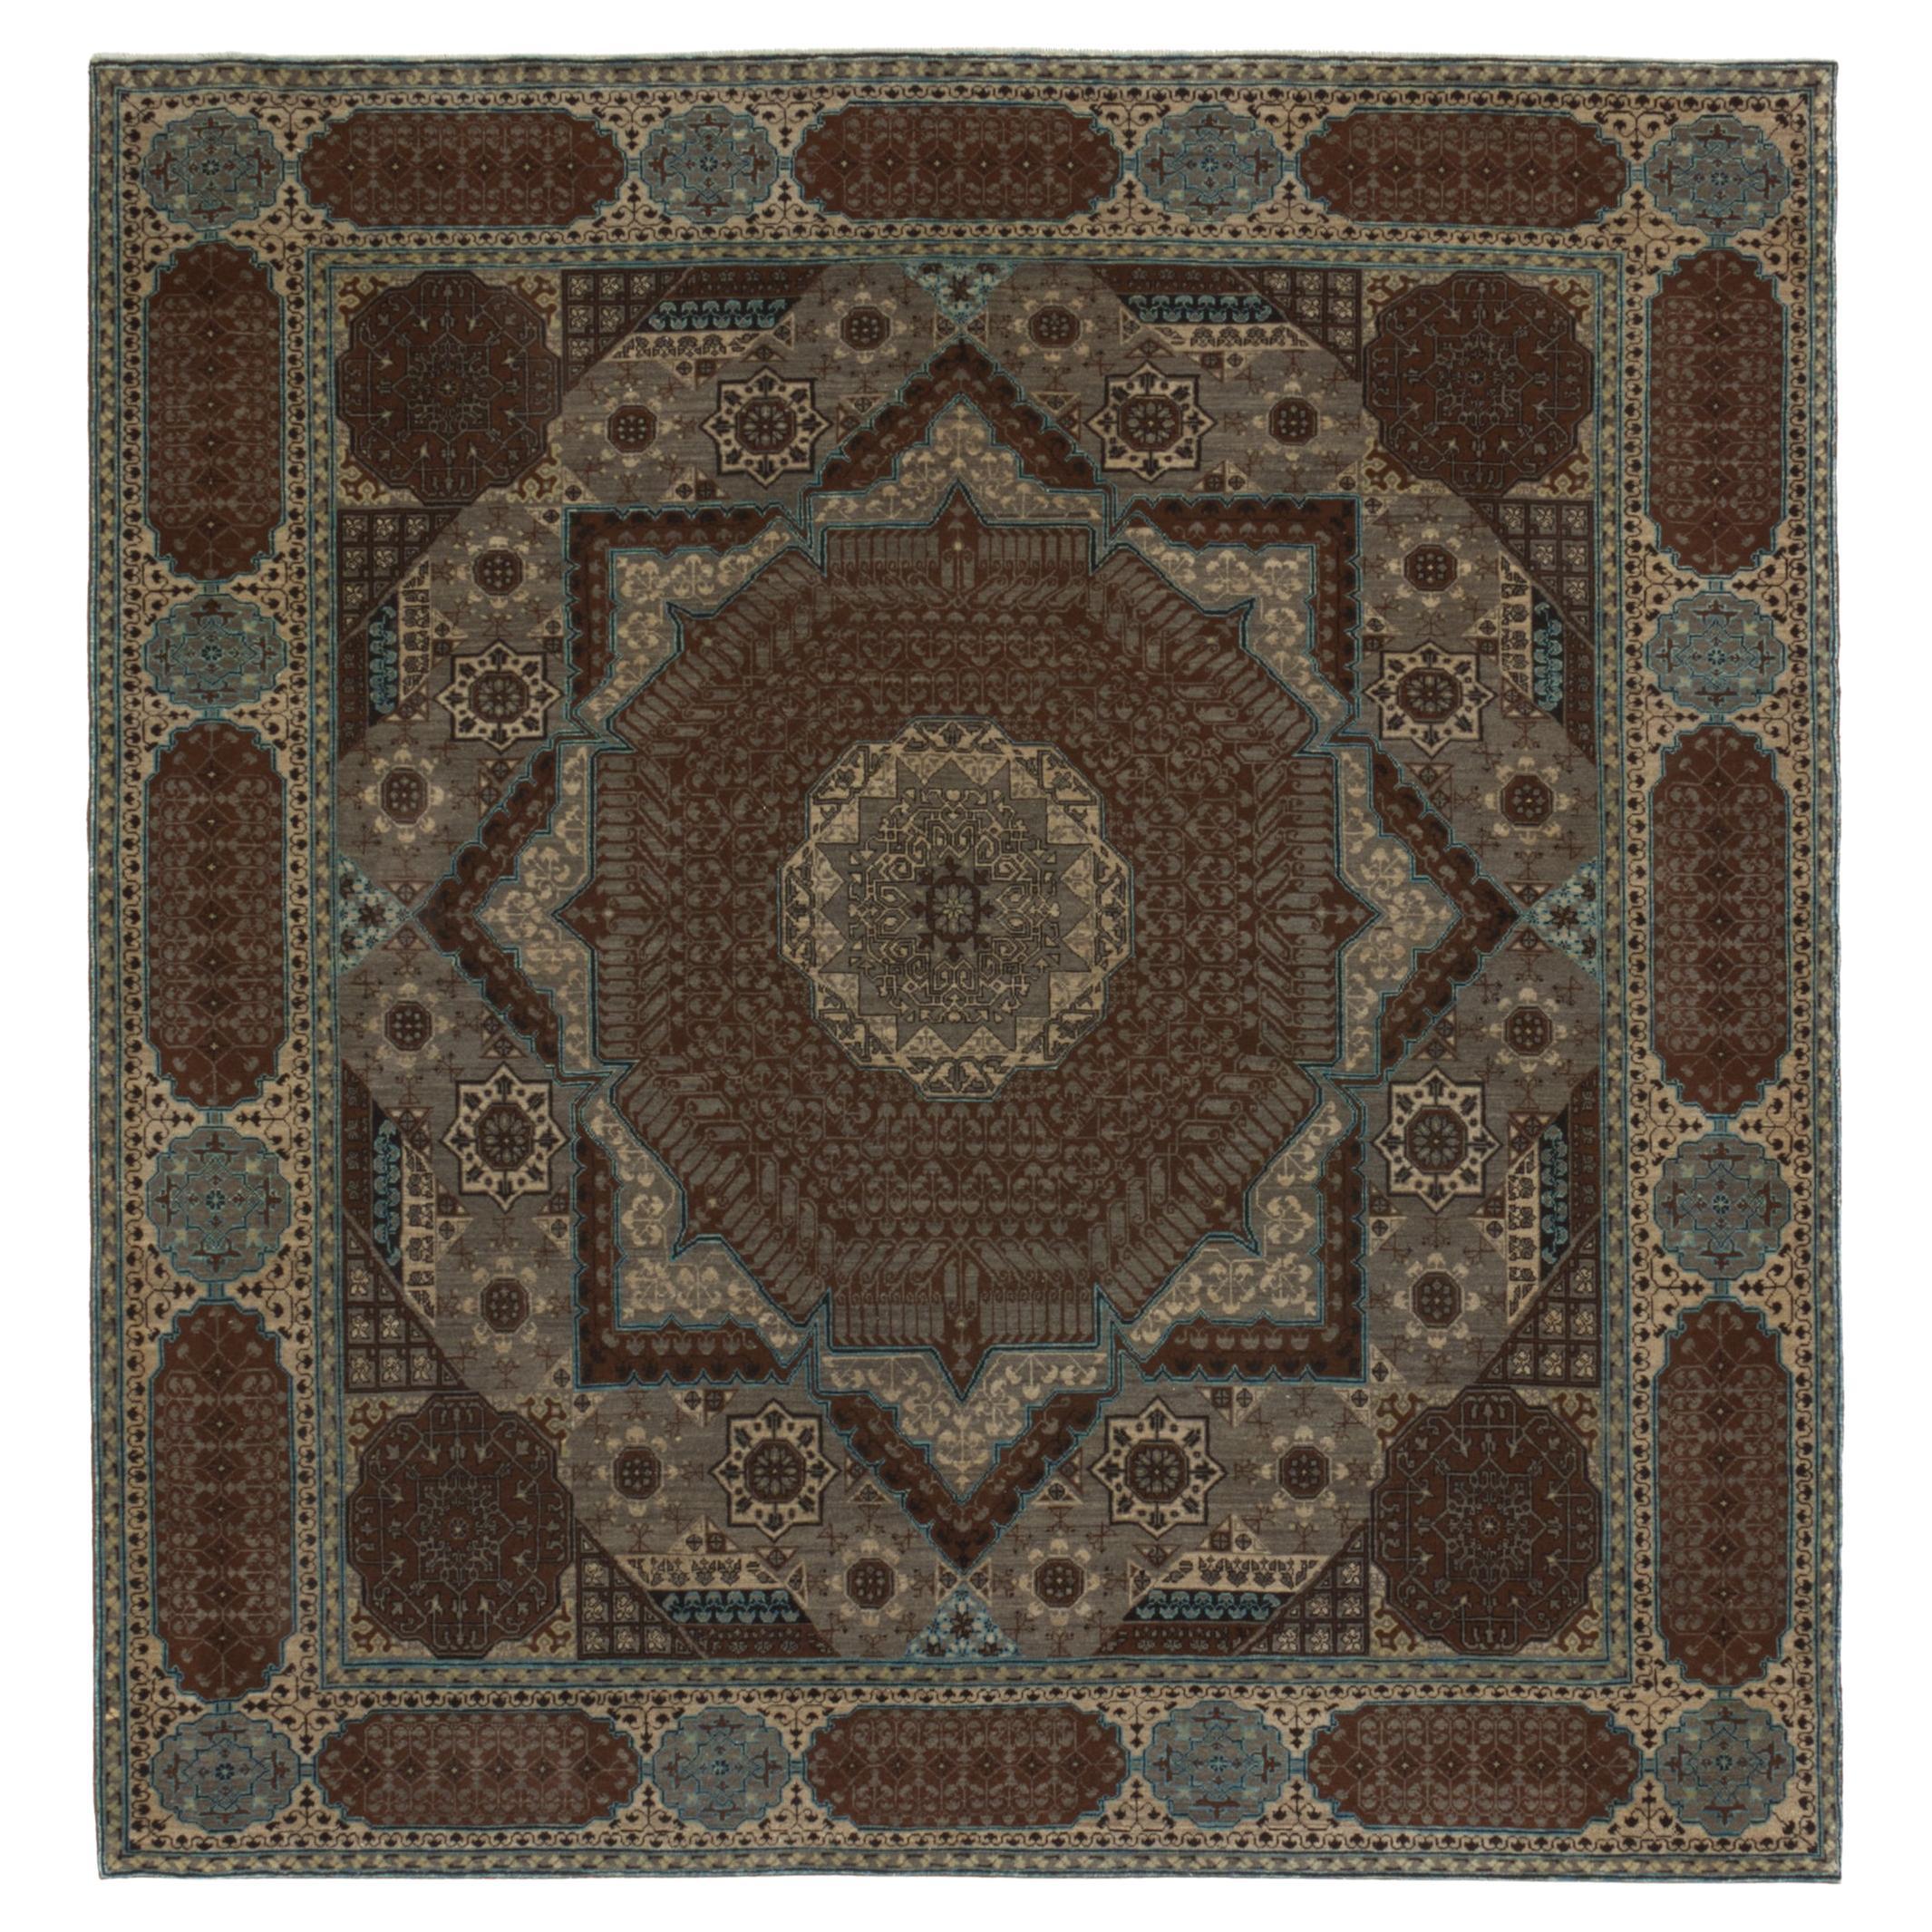 Ararat Rugs the Simonetti Mamluk Carpet 16th Century Revival Rug, Natural Dyed For Sale